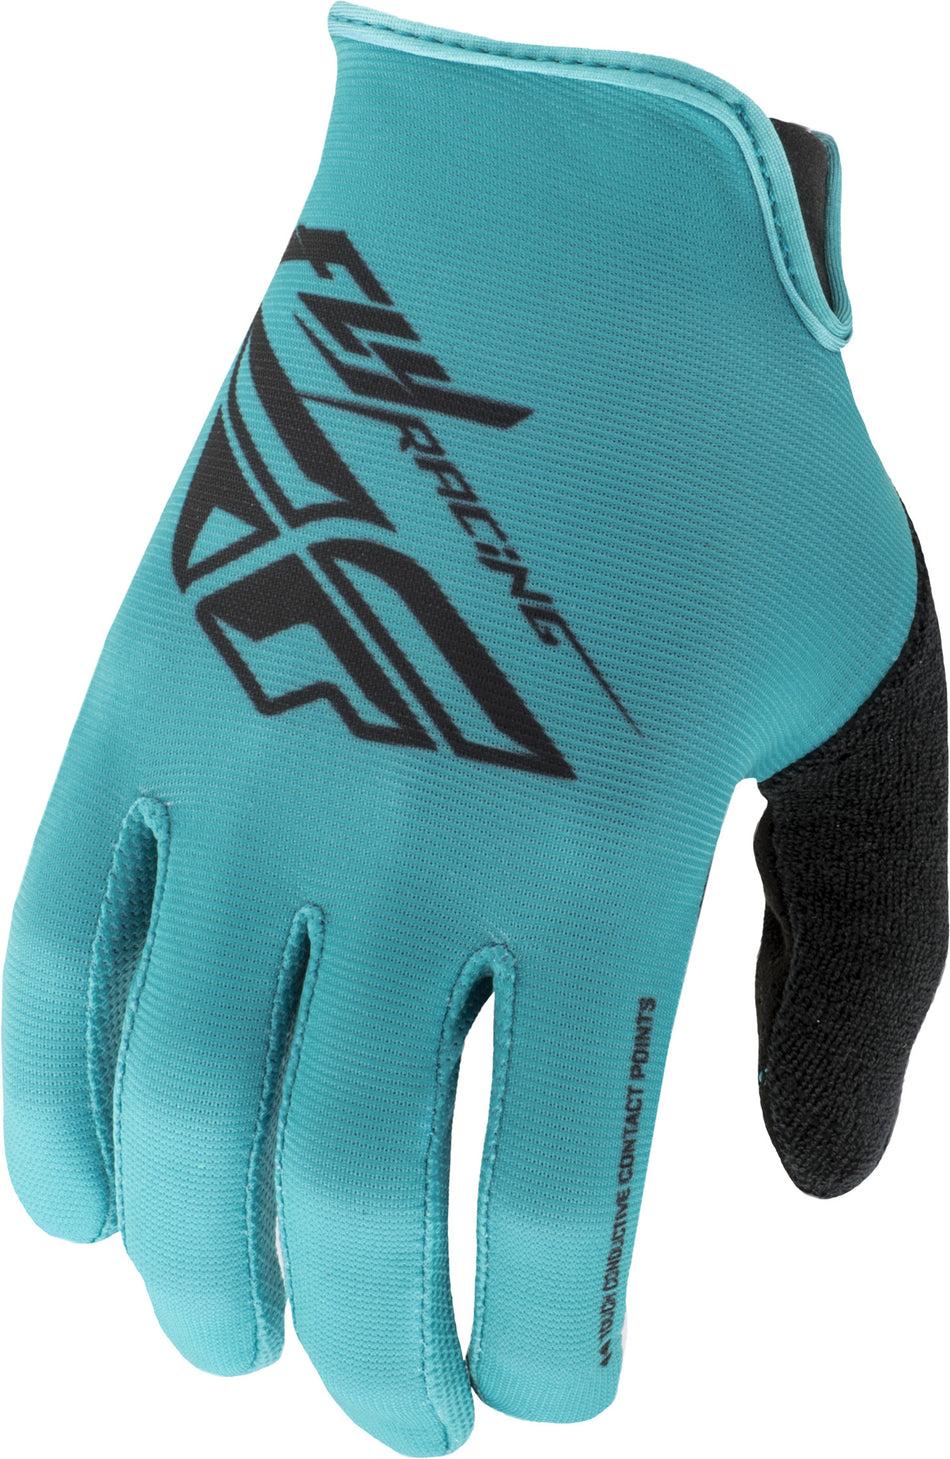 FLY RACING Media Gloves Teal/Black Sz 12 350-09712